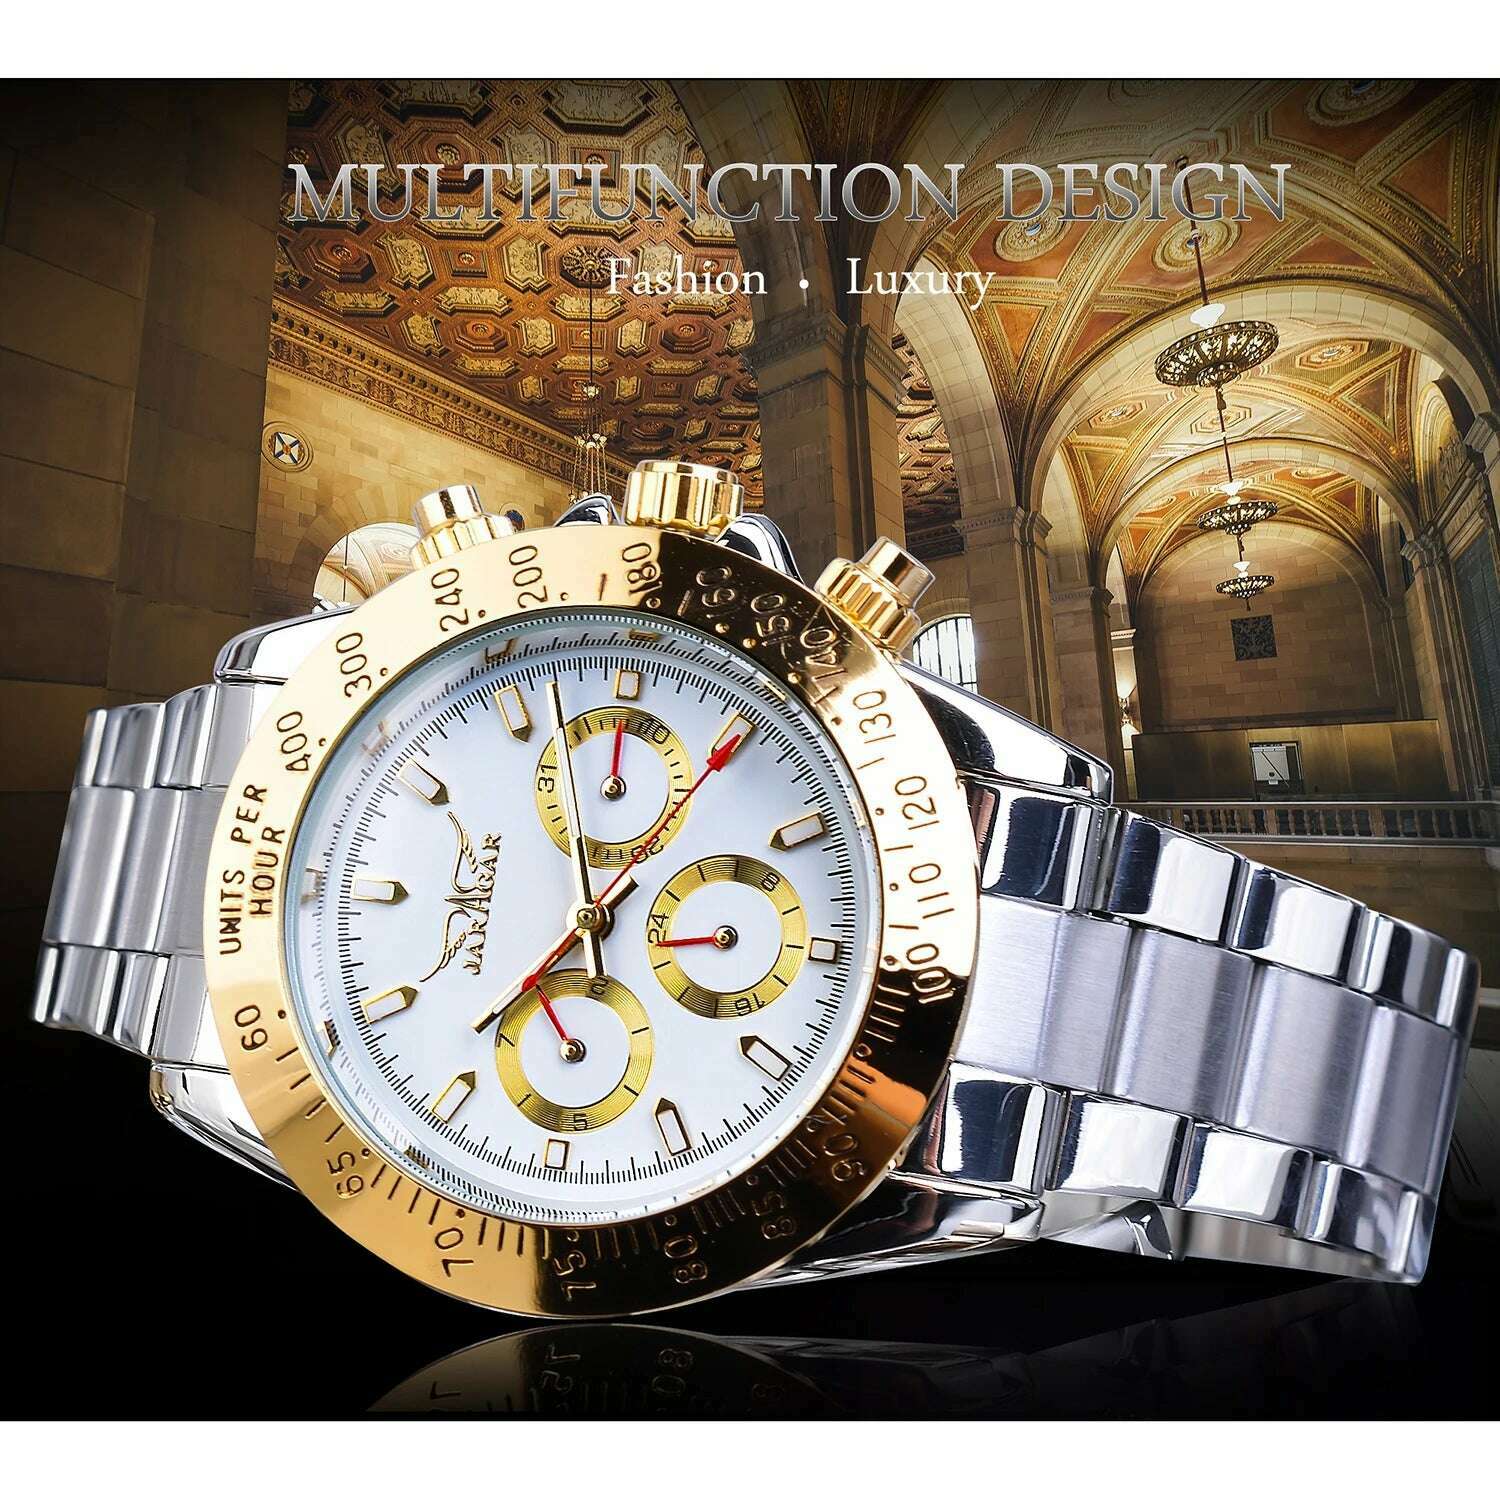 KIMLUD, Jaragar Relogio Masculino Watch Men 2019 Golden Big Dial Calendar Display Automatic Steel Wrist Watches Mechanical Clock For Men, KIMLUD Women's Clothes